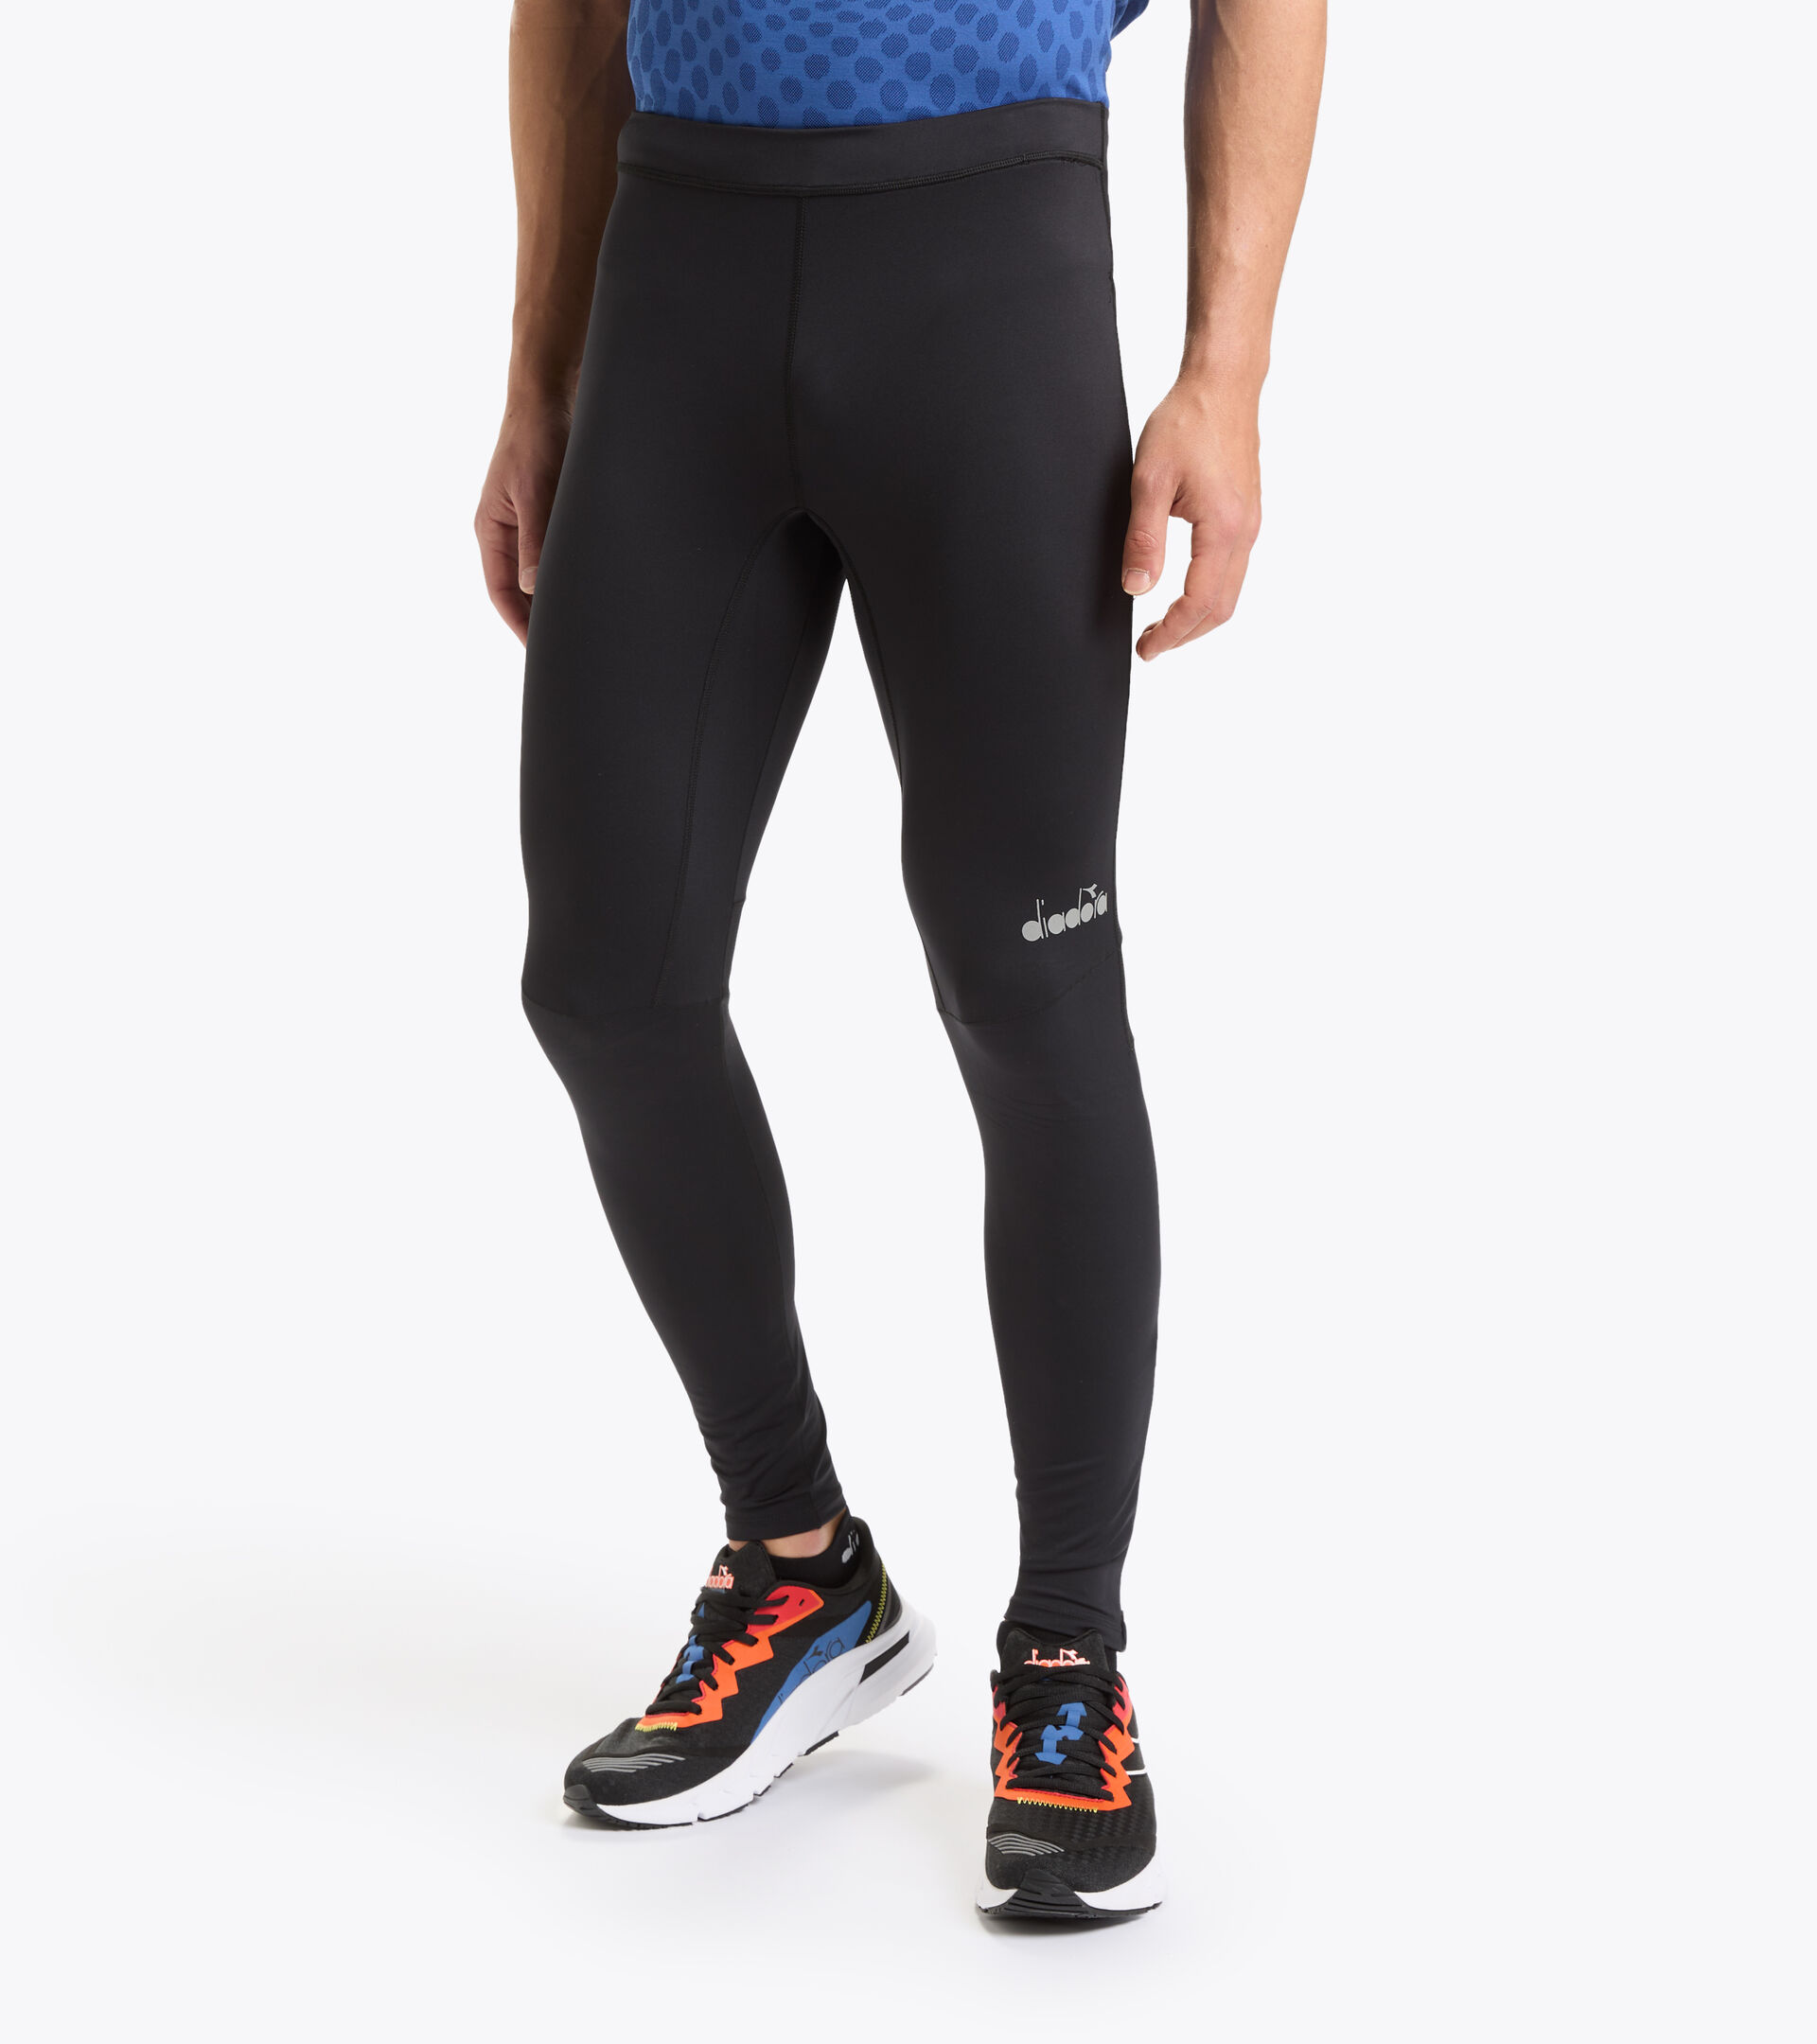 Nike Tights Long Mens / Mens Sports Legging / Yoga Leggings / Running Tights